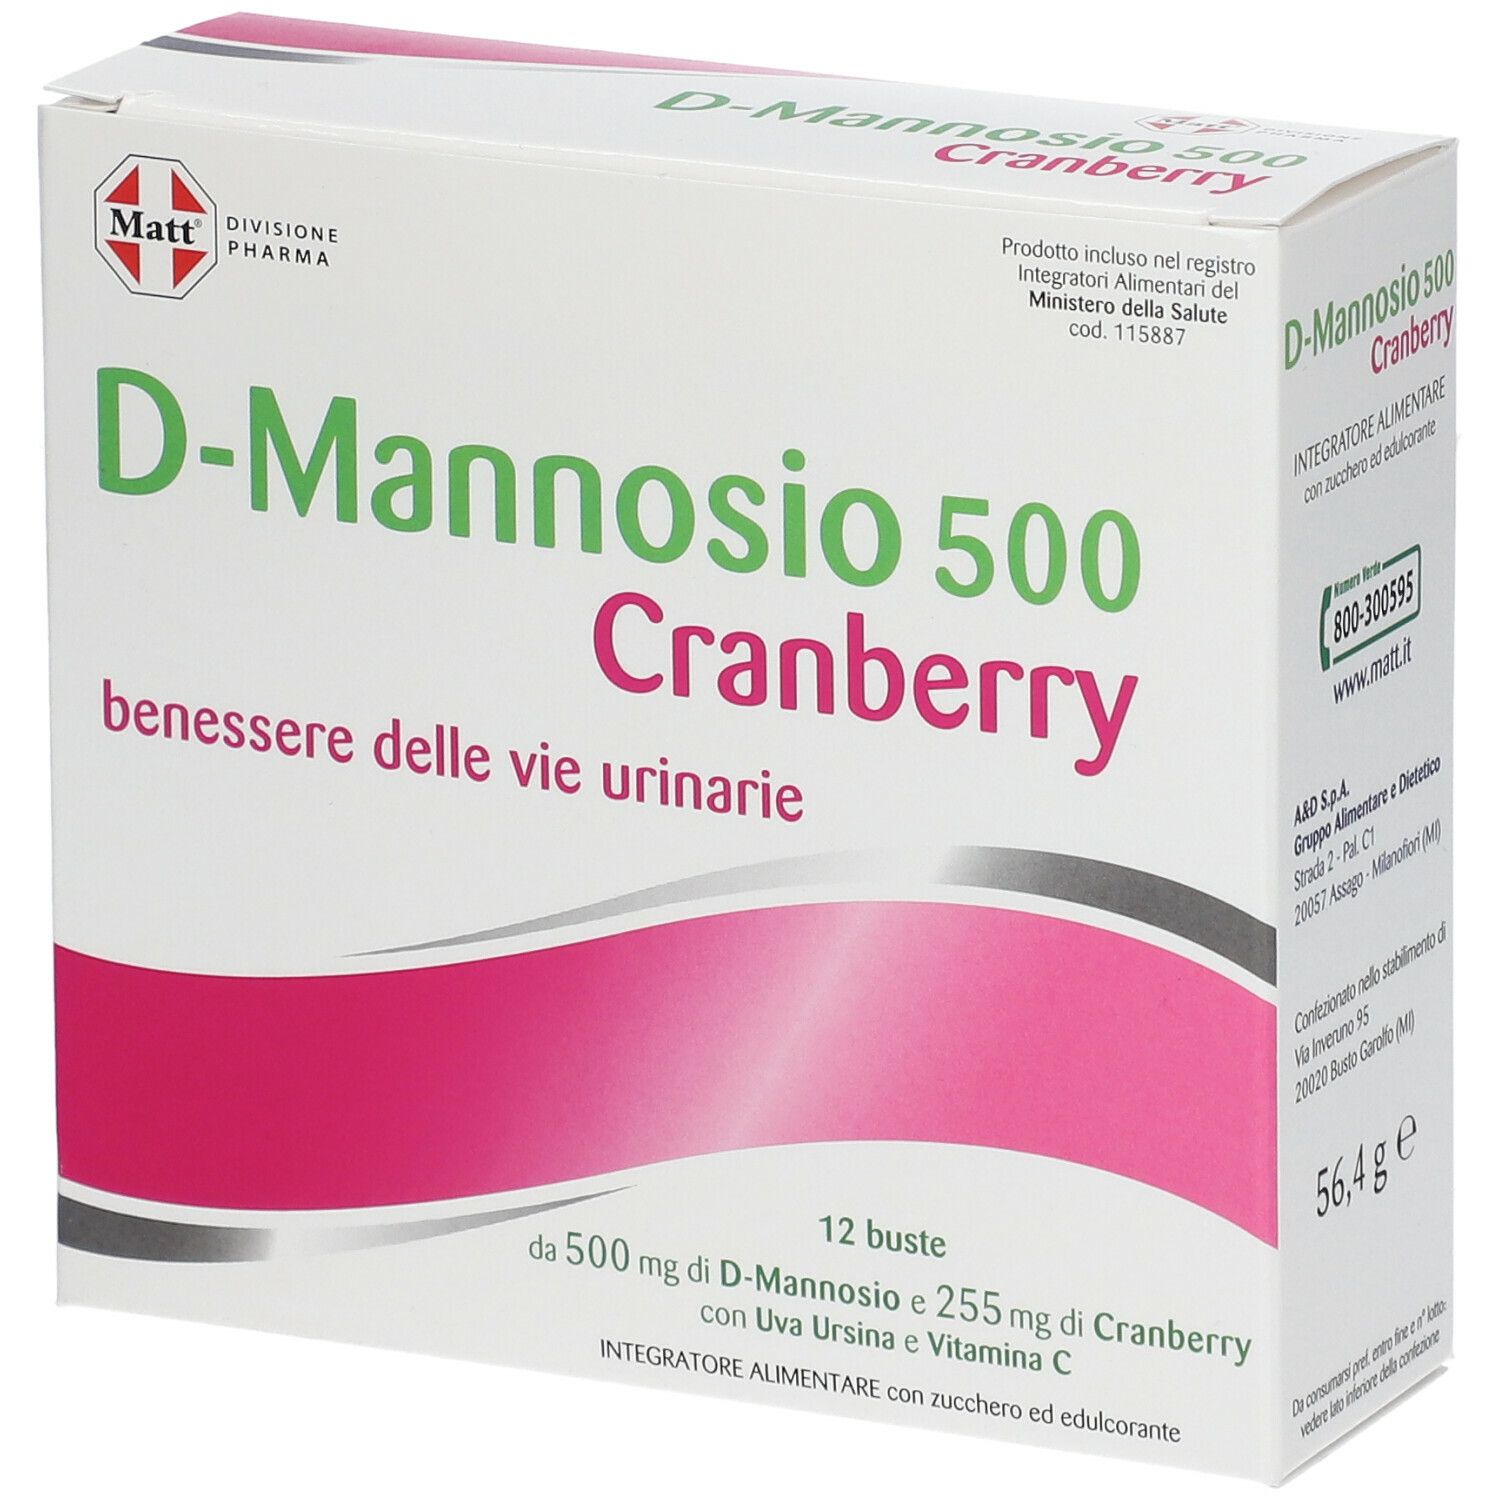 Matt® Pharma D-Mannosio 500 Cranberry